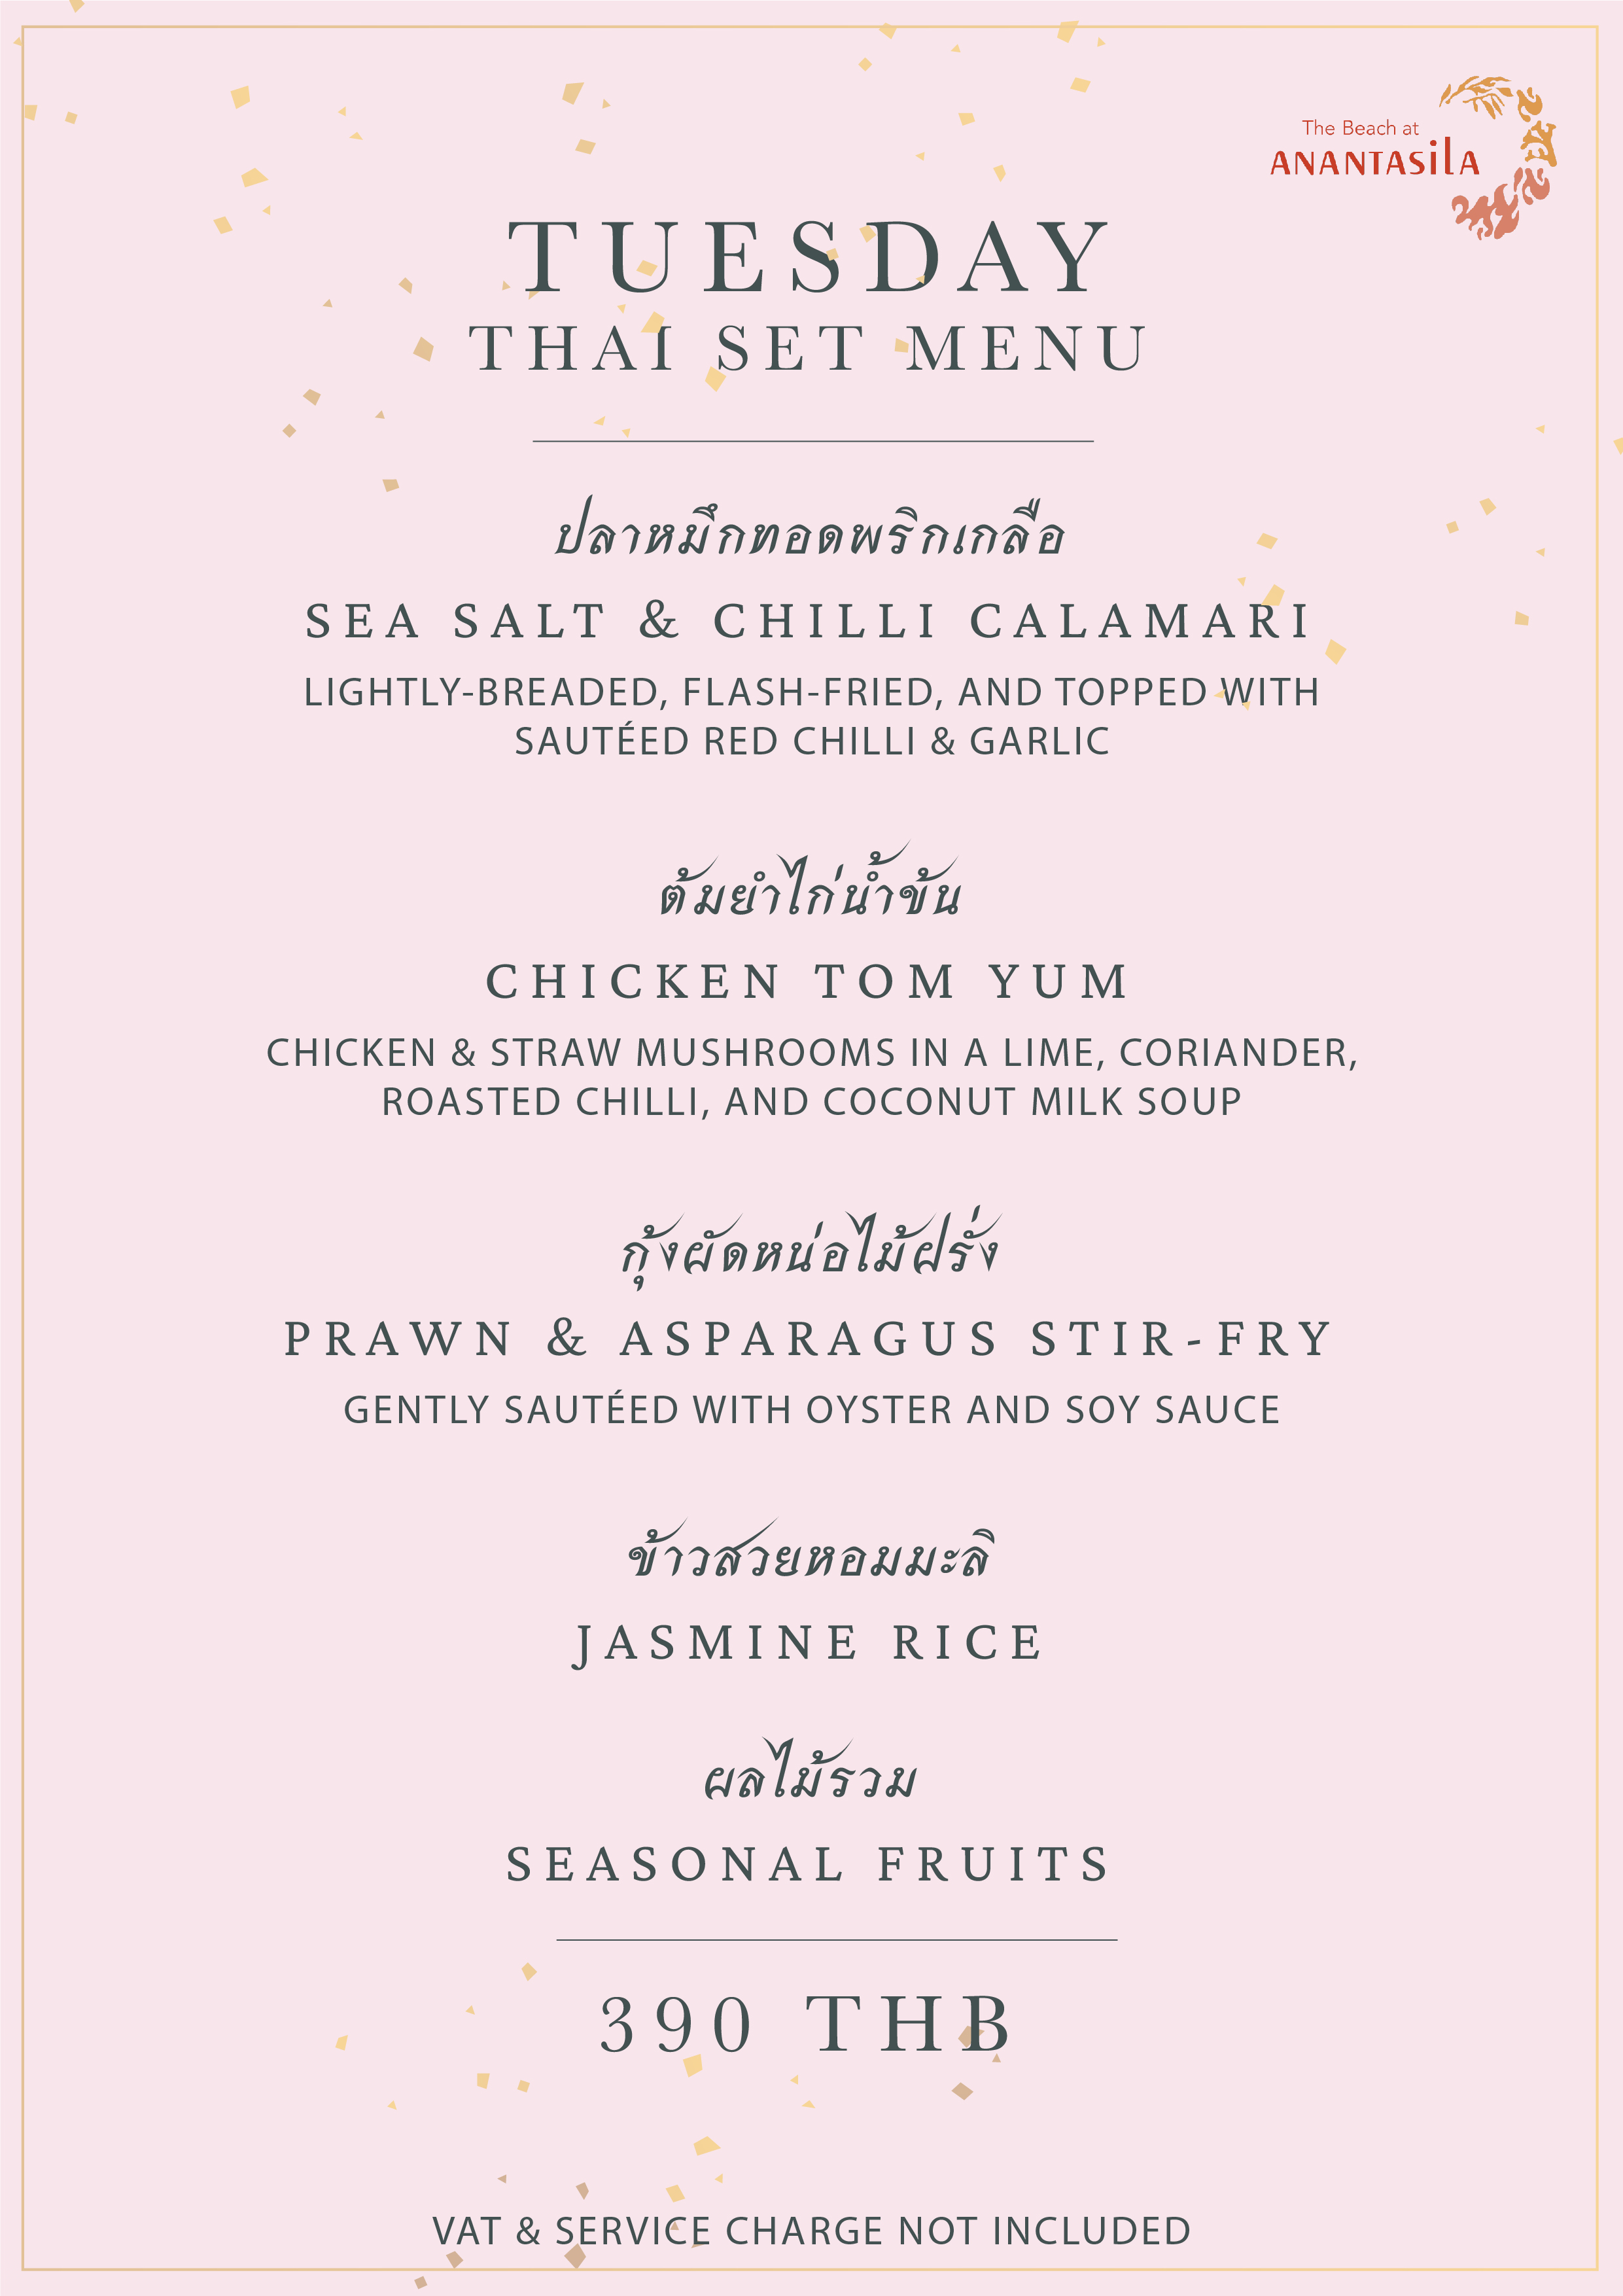 Thai set menu Tuesday